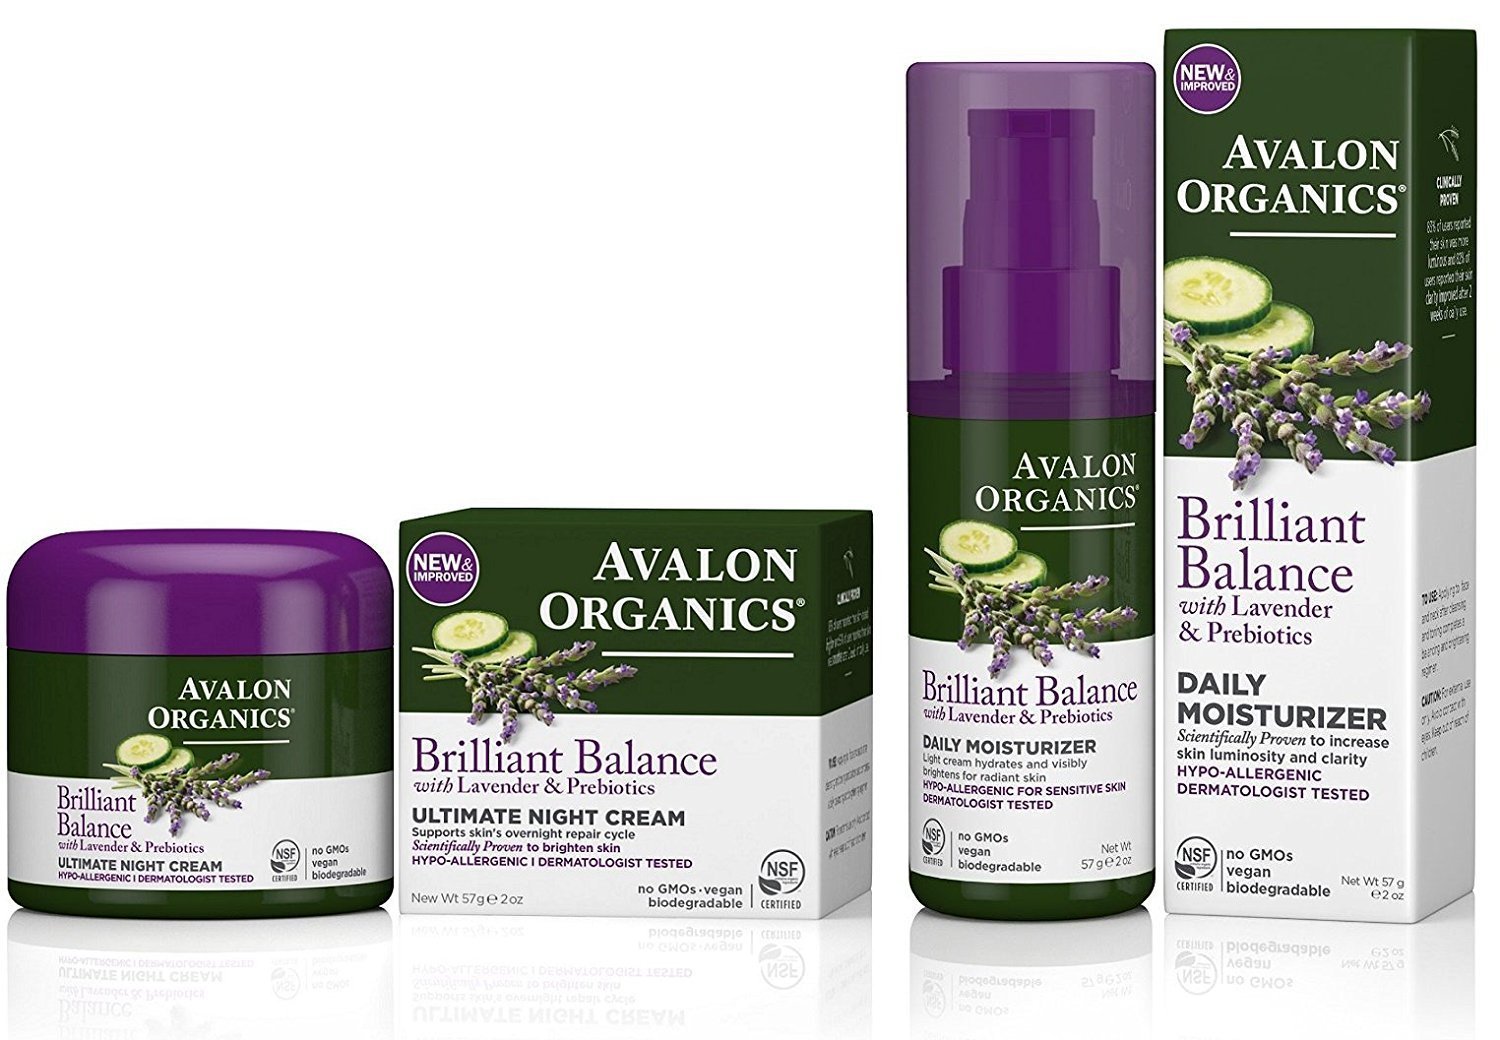 avalon organics brilliant balance cleansing gel review